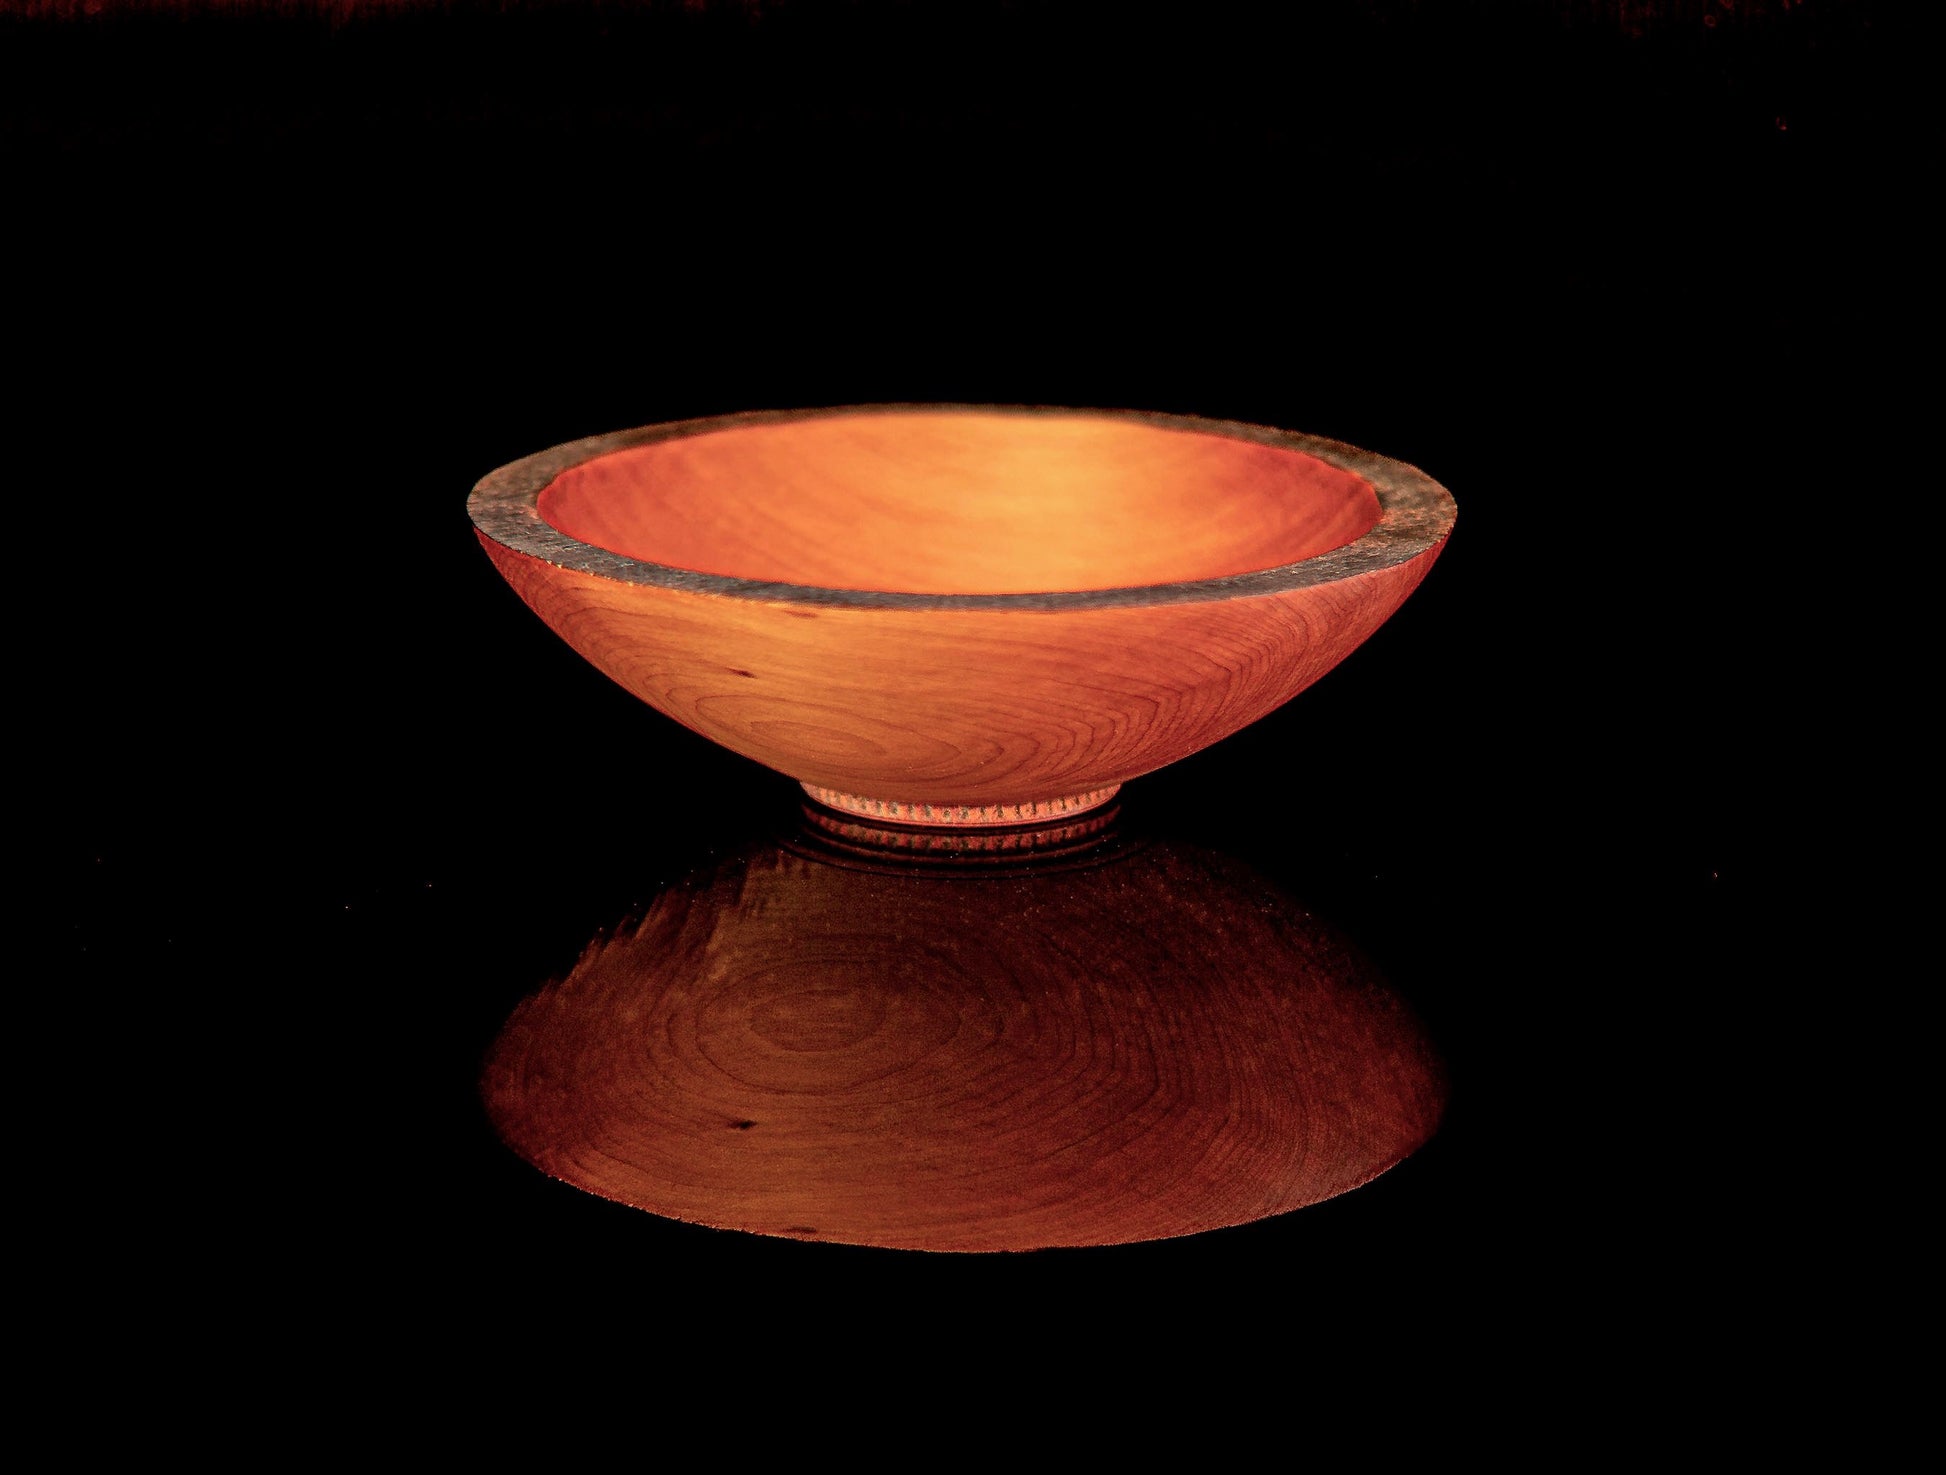 Totara Wood Bowl by Woodturner Mark Russell No378